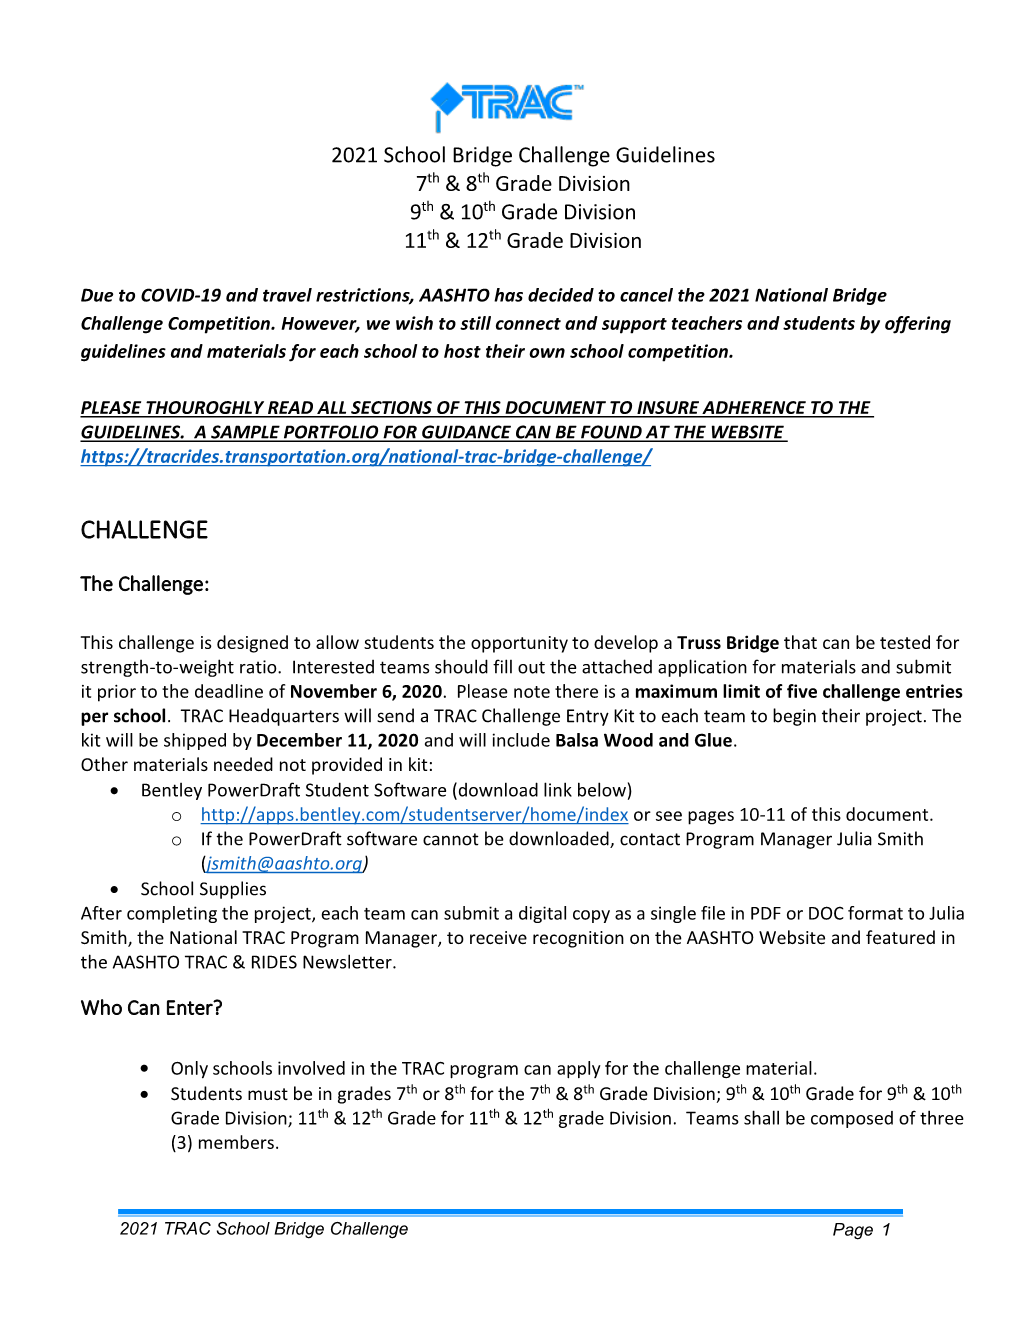 TRAC Drawbridge Competition Guidelines